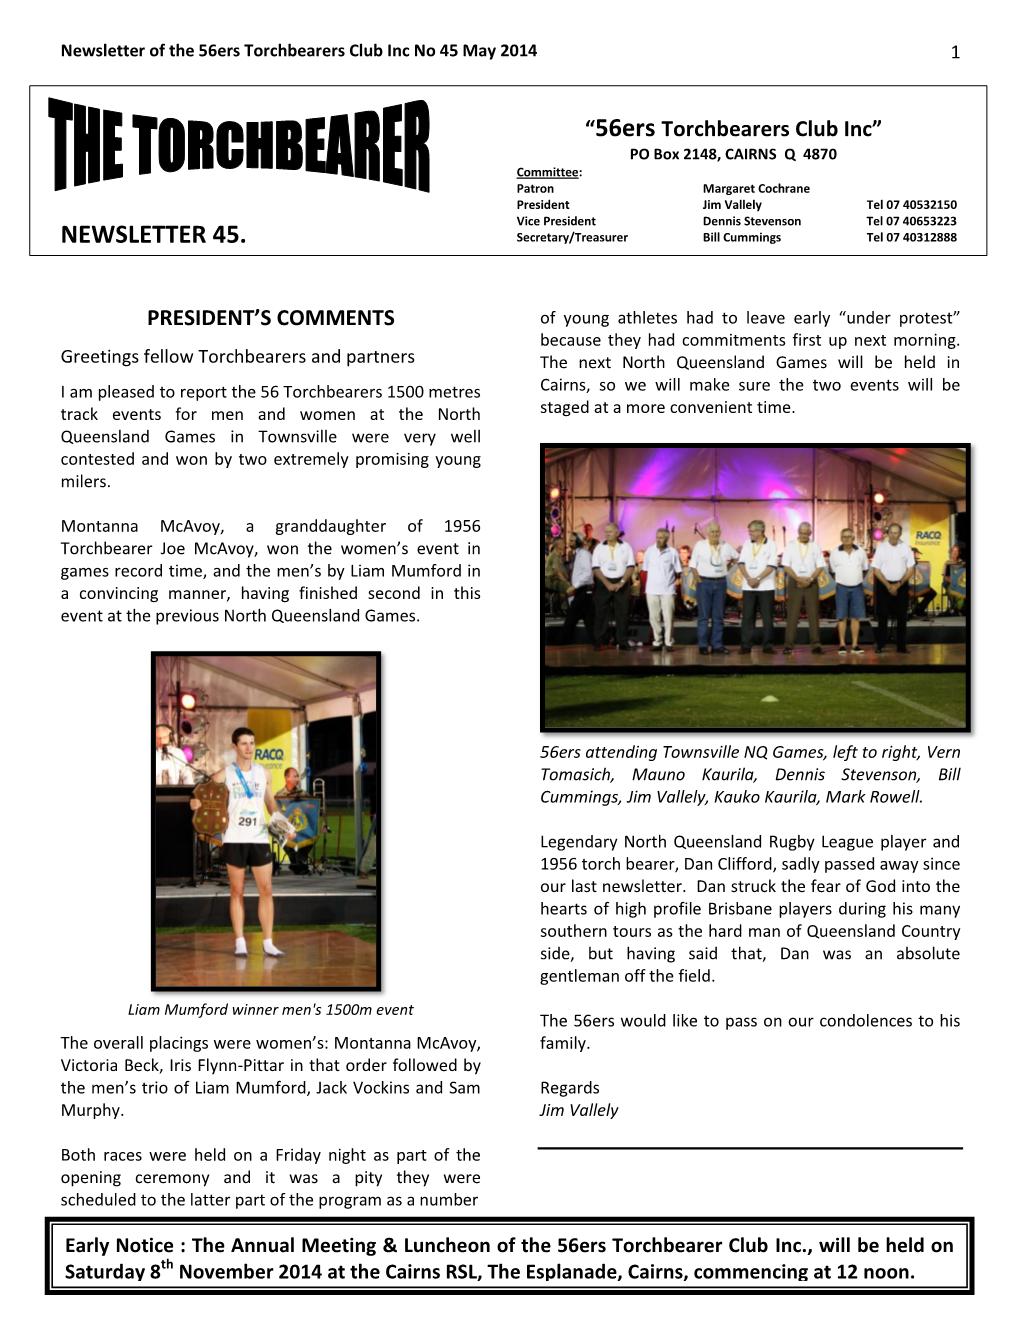 Newsletter 45 the Torchbearer May 2014 (.Pdf)